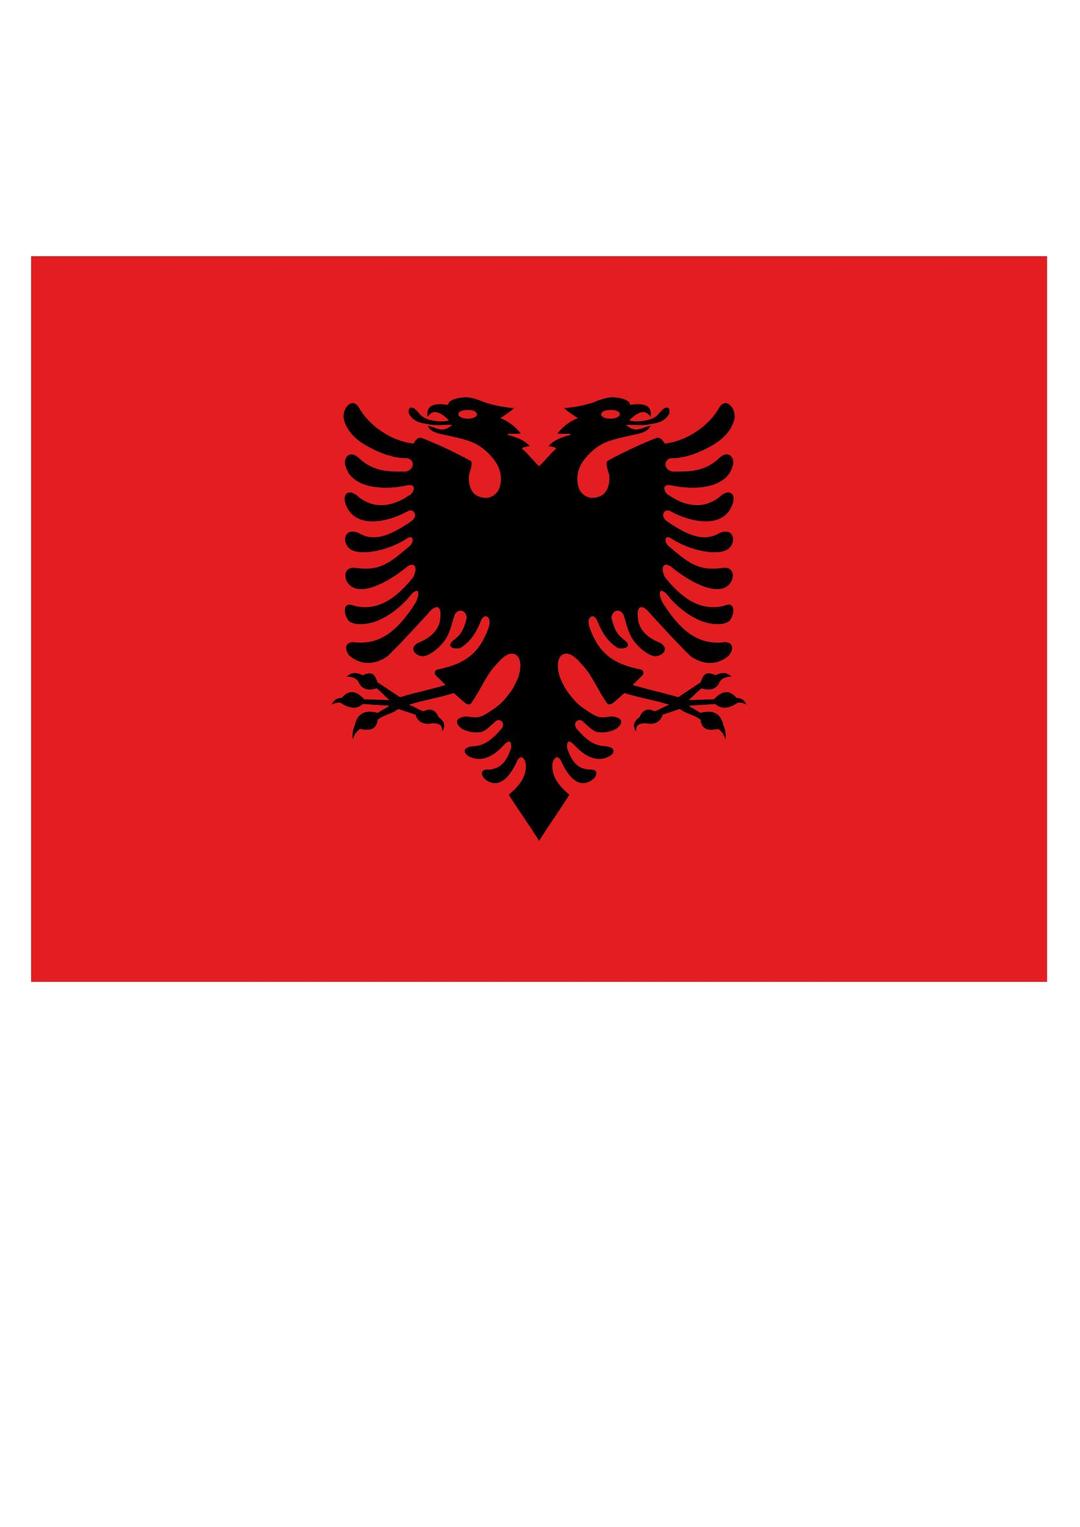 Flag of Albania - Flamuri shqiptar png transparent